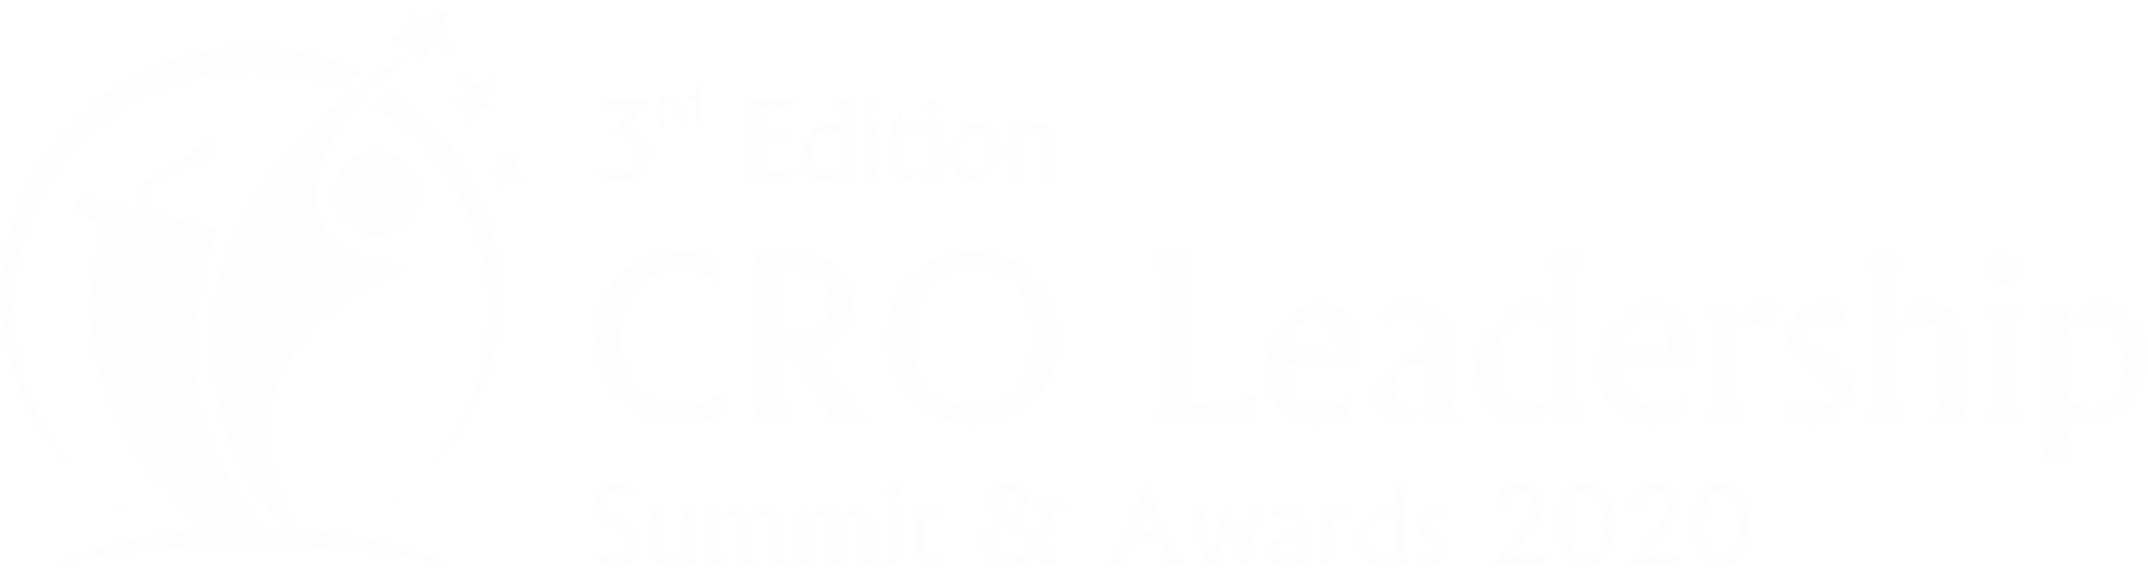 3rd Edition CRO Leadership Summit and Awards 2020